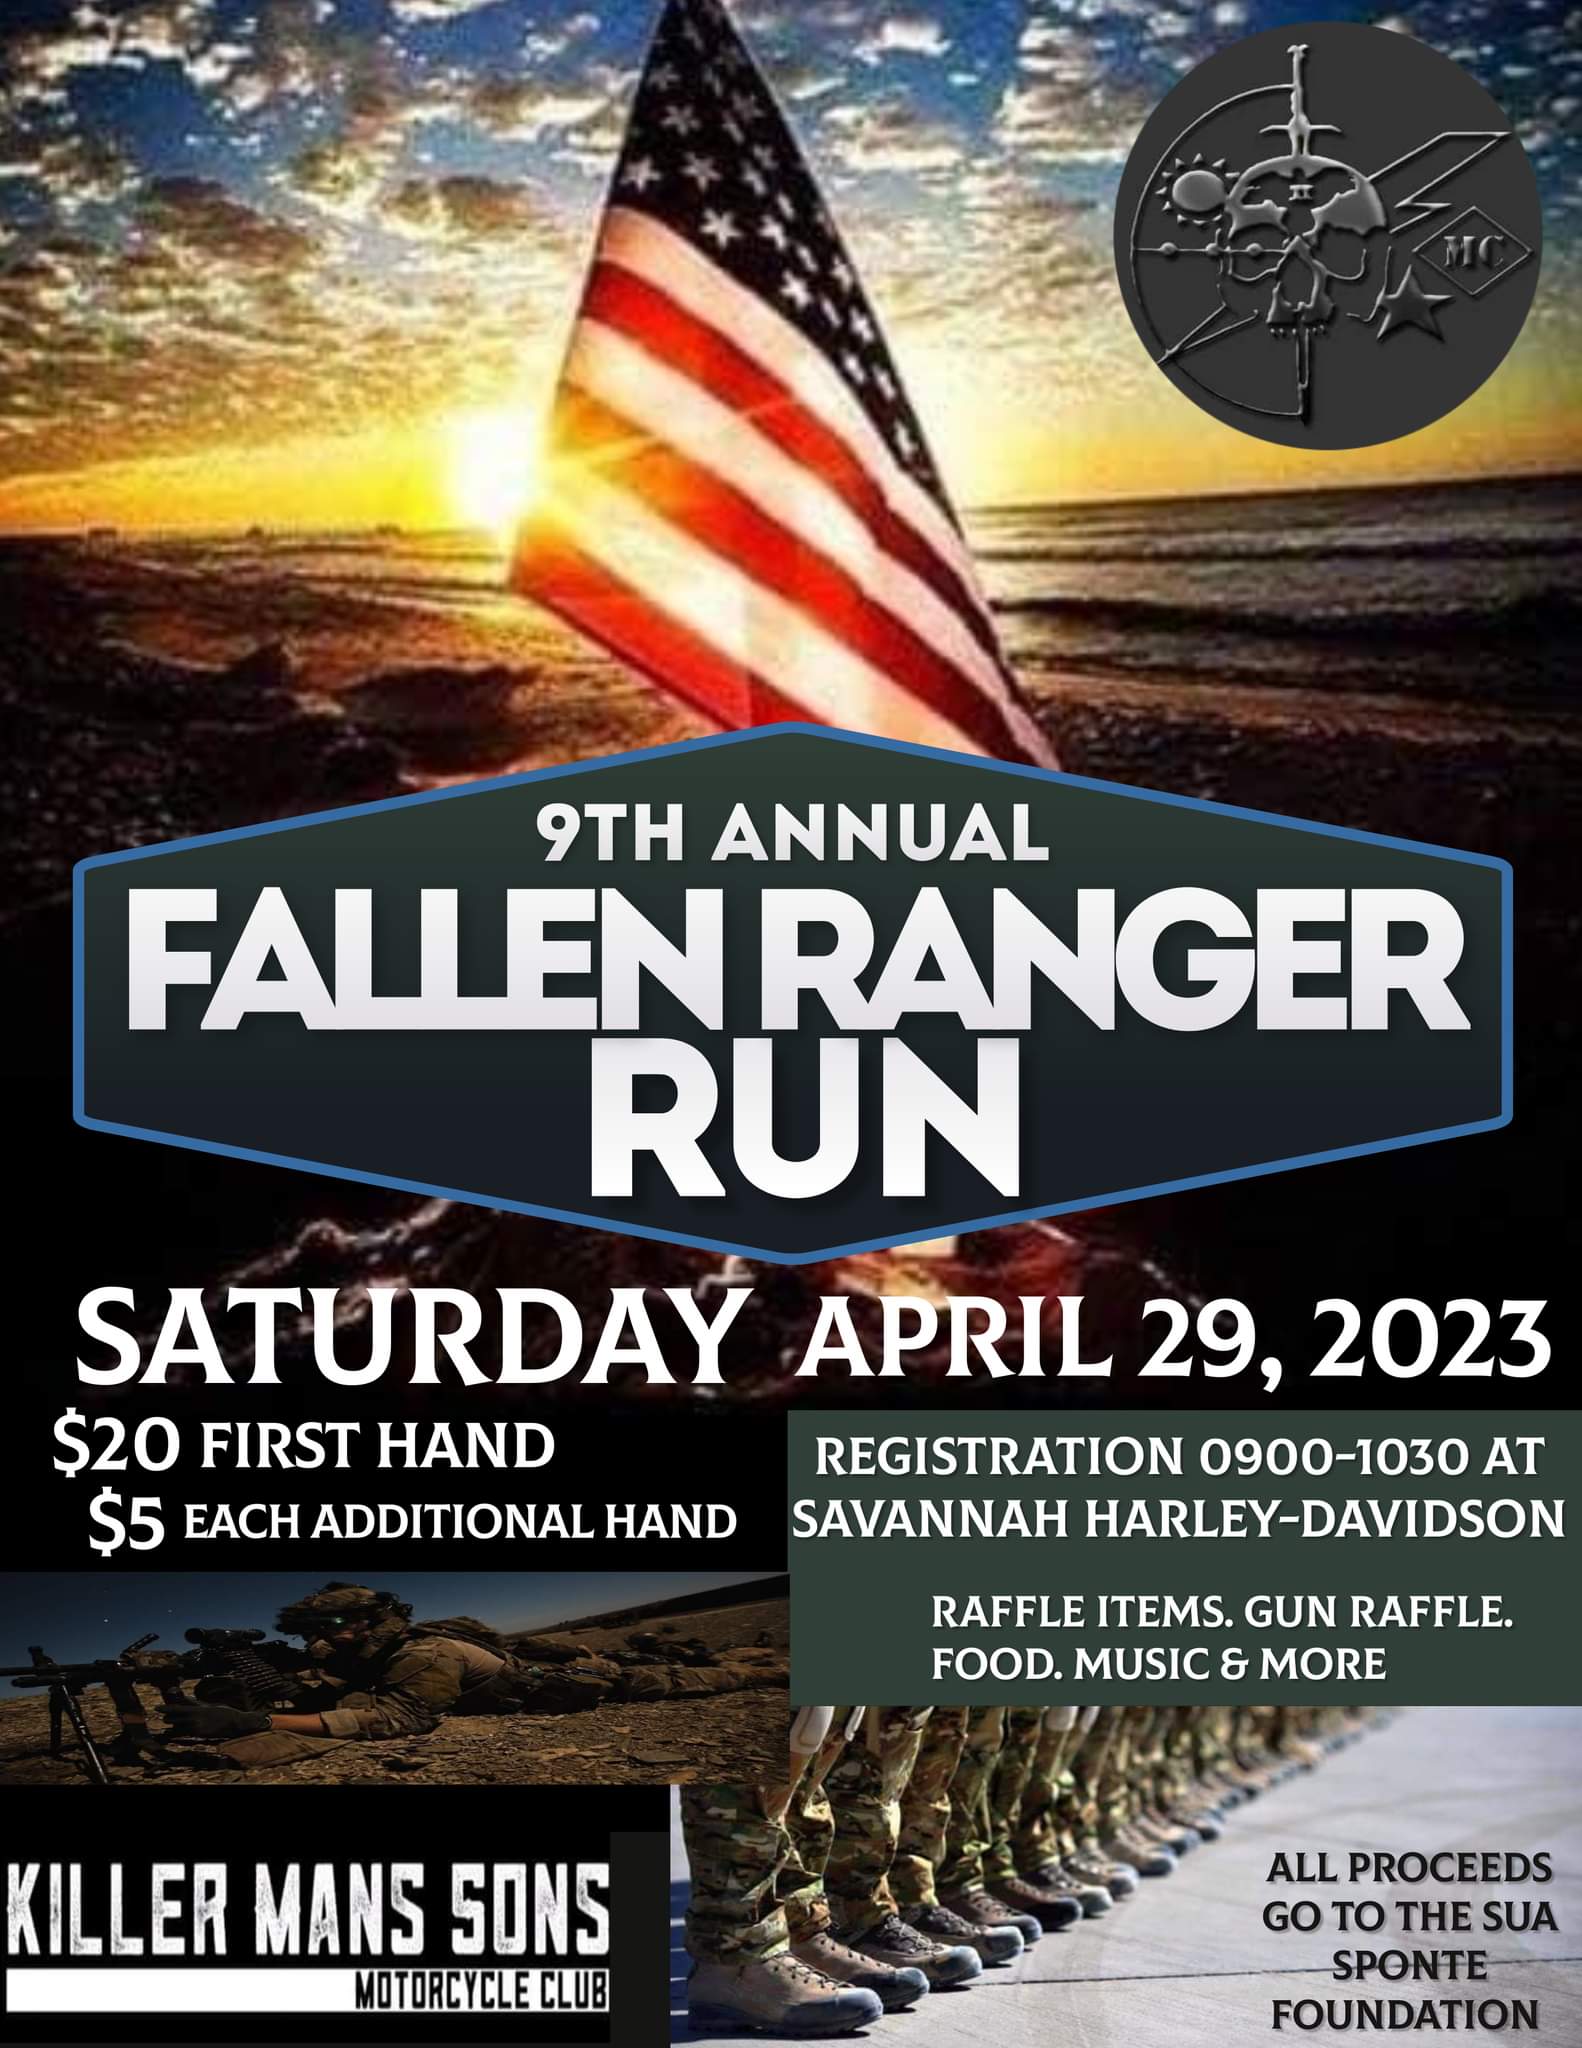 KMSMC - 9th Annual Fallen Ranger Run @ Savannah Harley-Davidson | Savannah | Georgia | United States